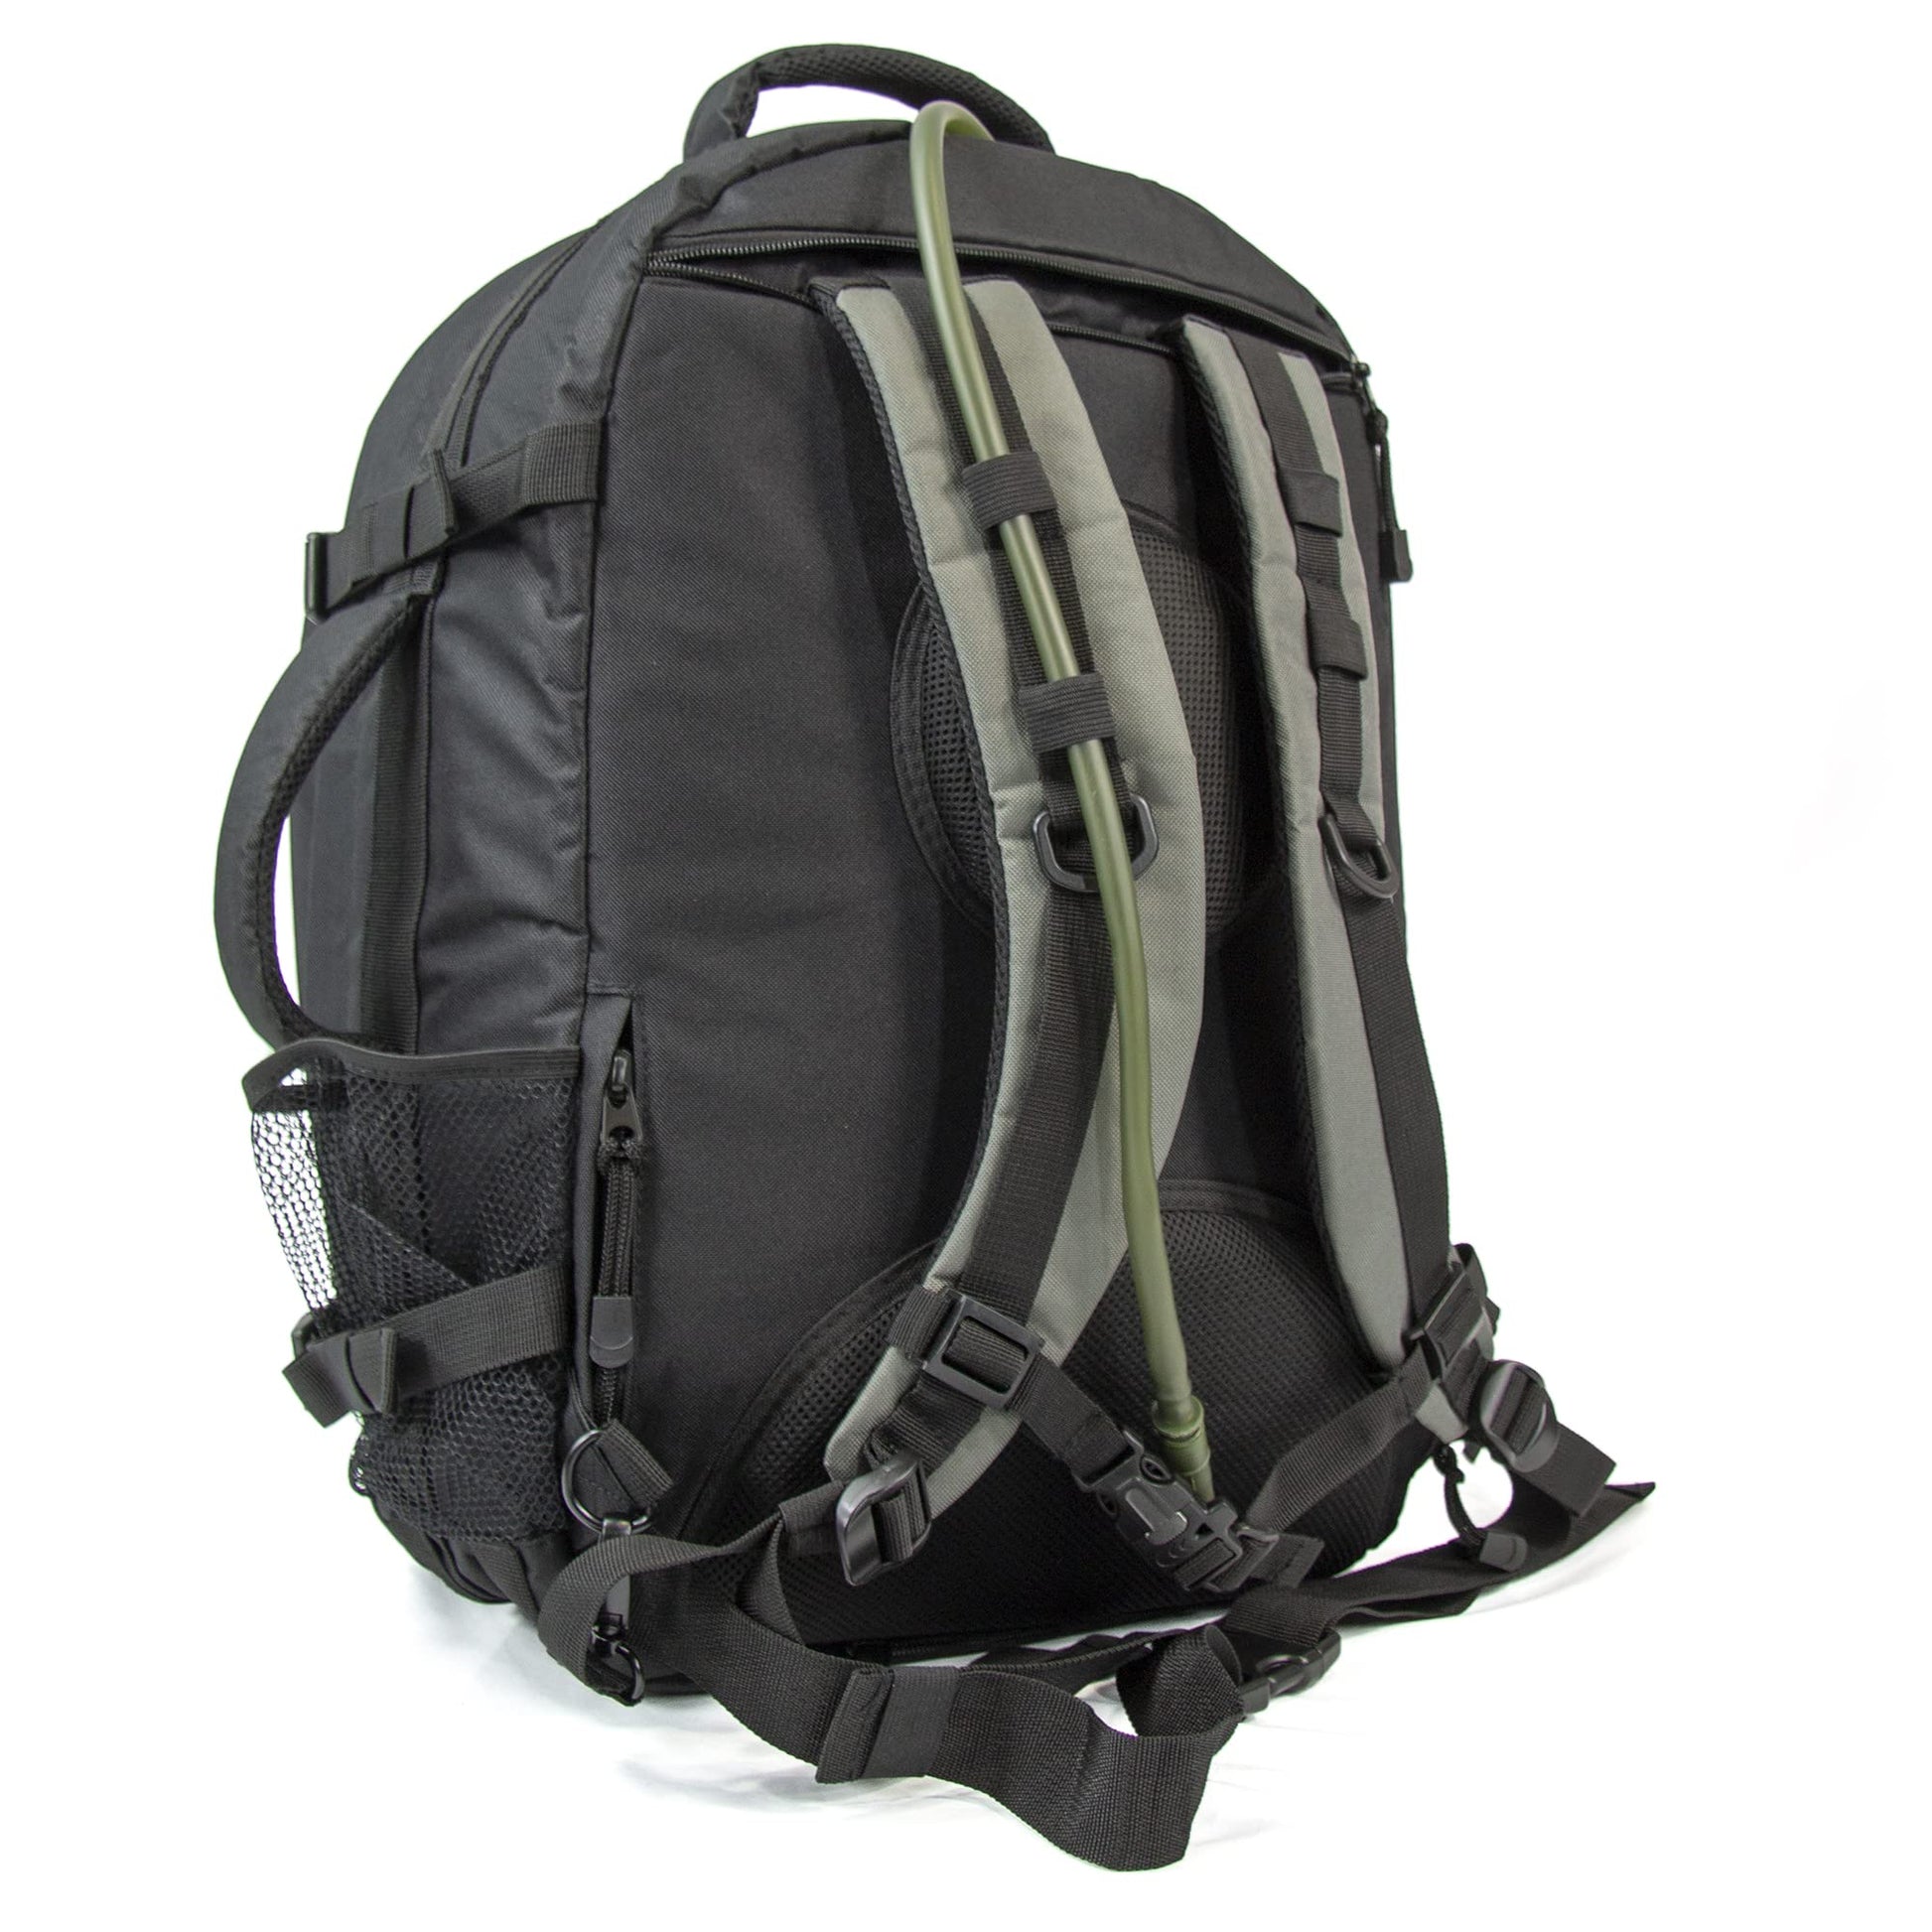 Emergency Zone Backpack: Tactical, Red, Black</li>     <li>Lightweight & Durable